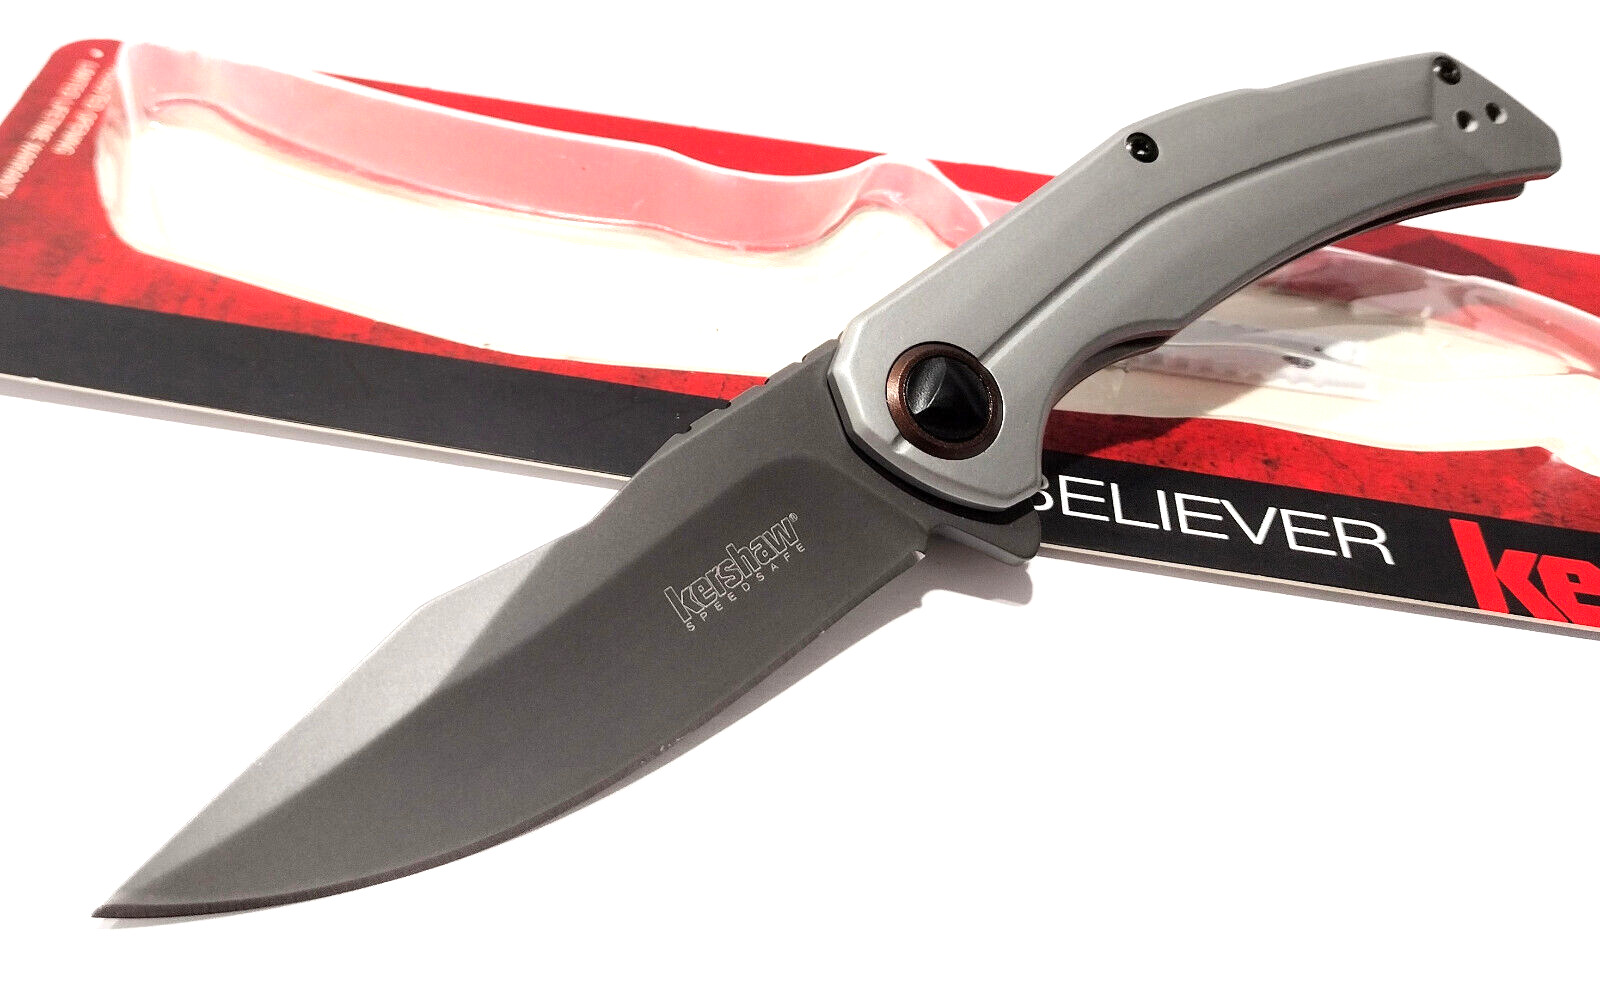 KERSHAW KS2070 Believer Tactical Spring Open Assisted Folding Pocket Knife EDC